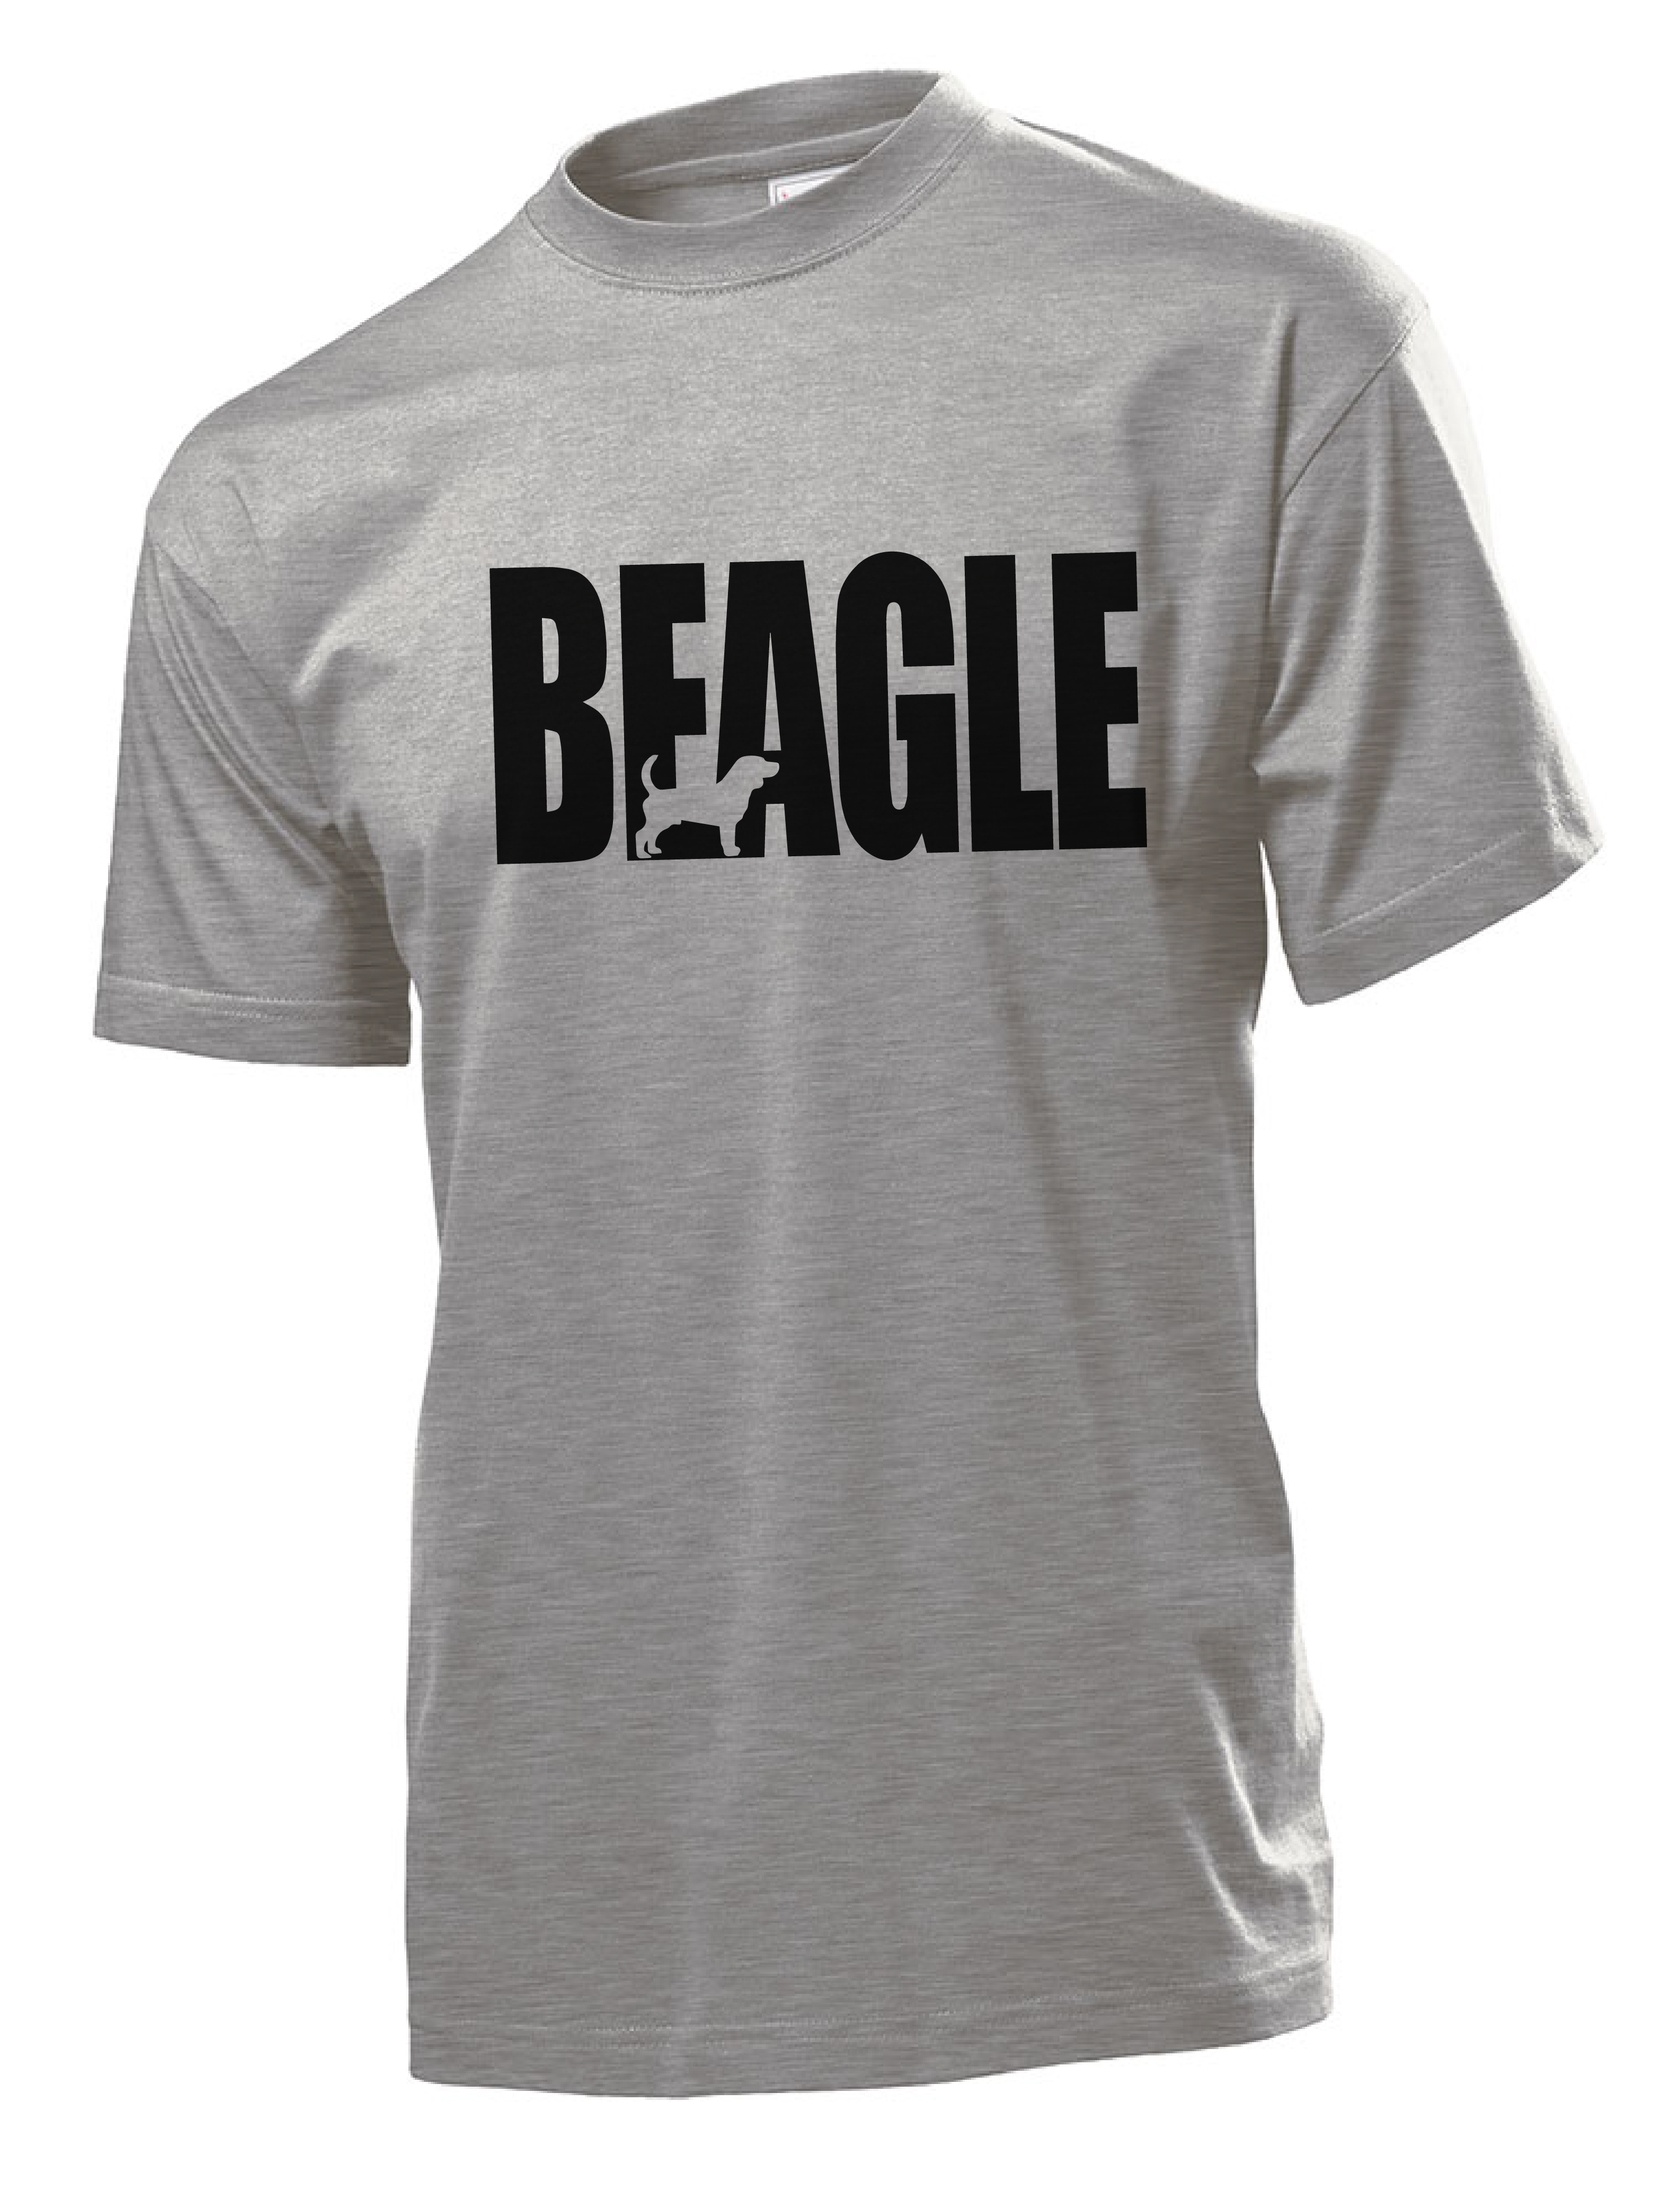 Tričko s potiskem Beagle 